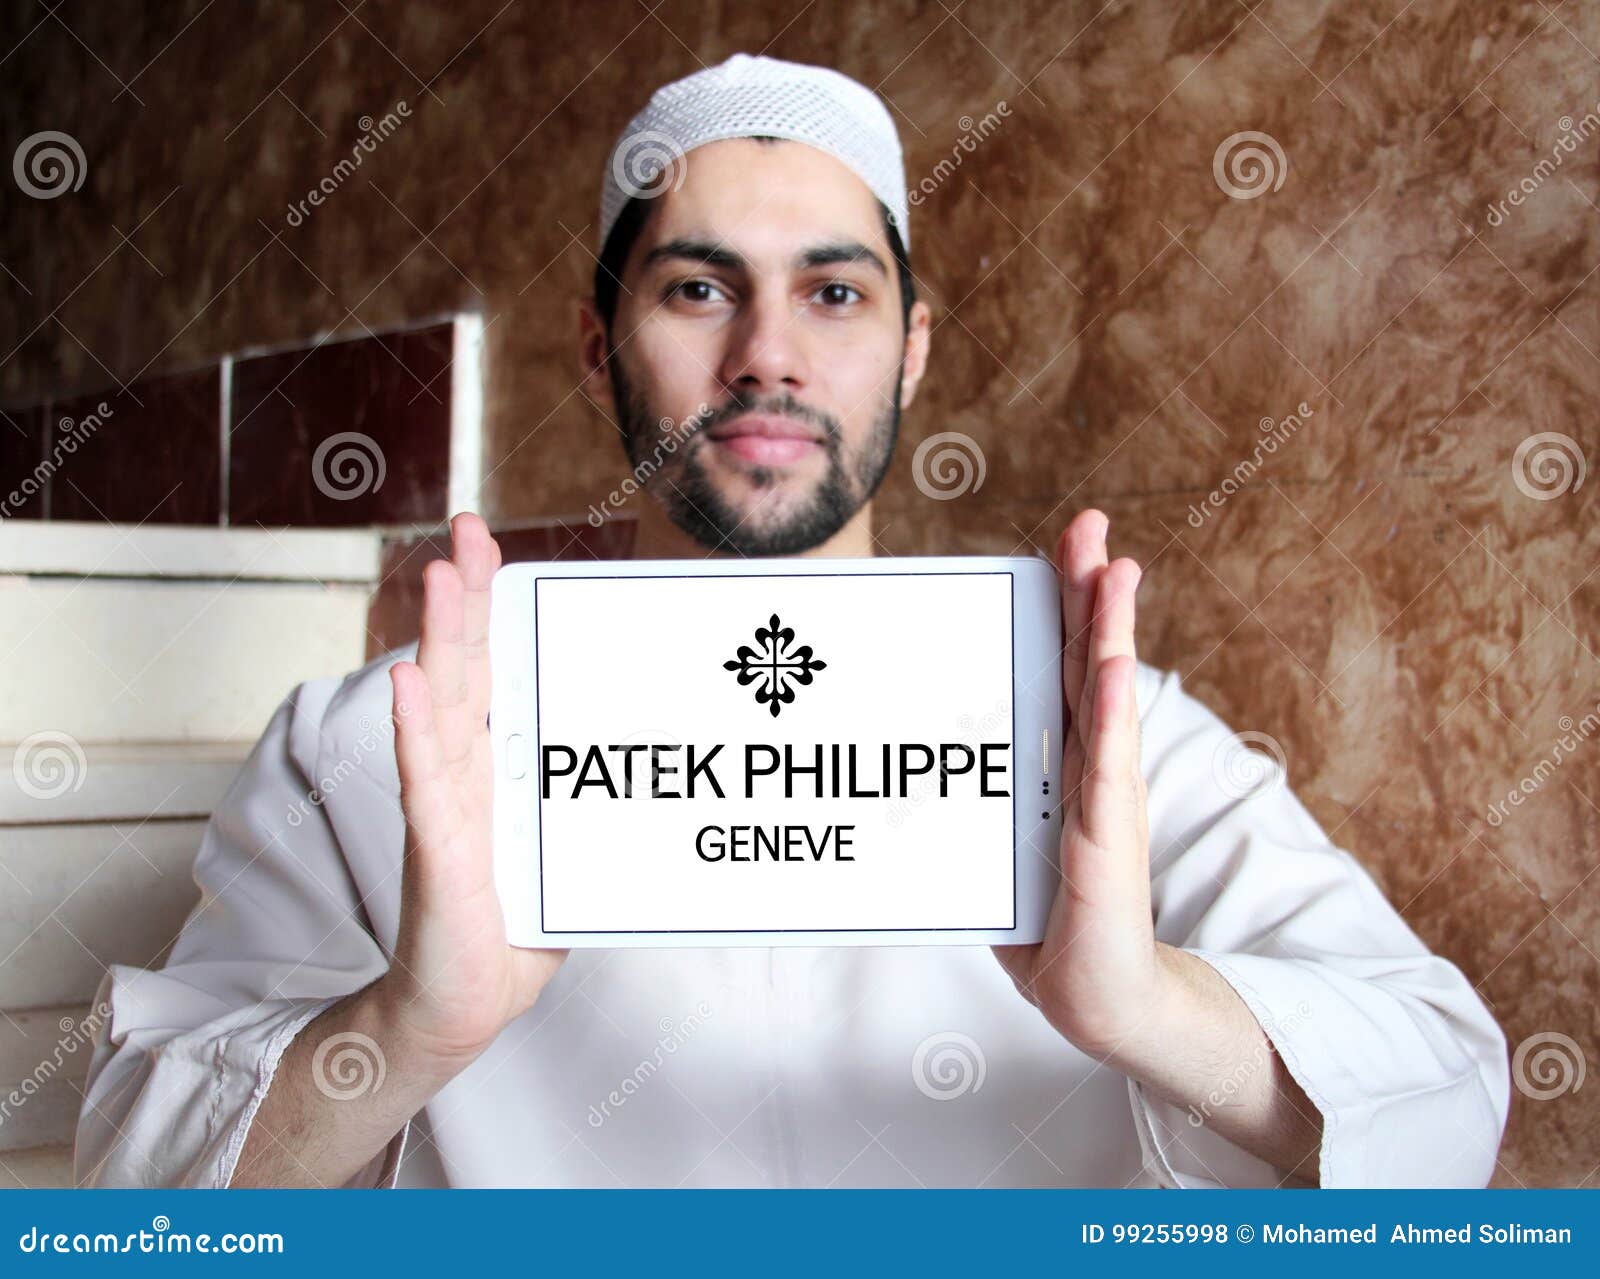 Patek Philippe, Company